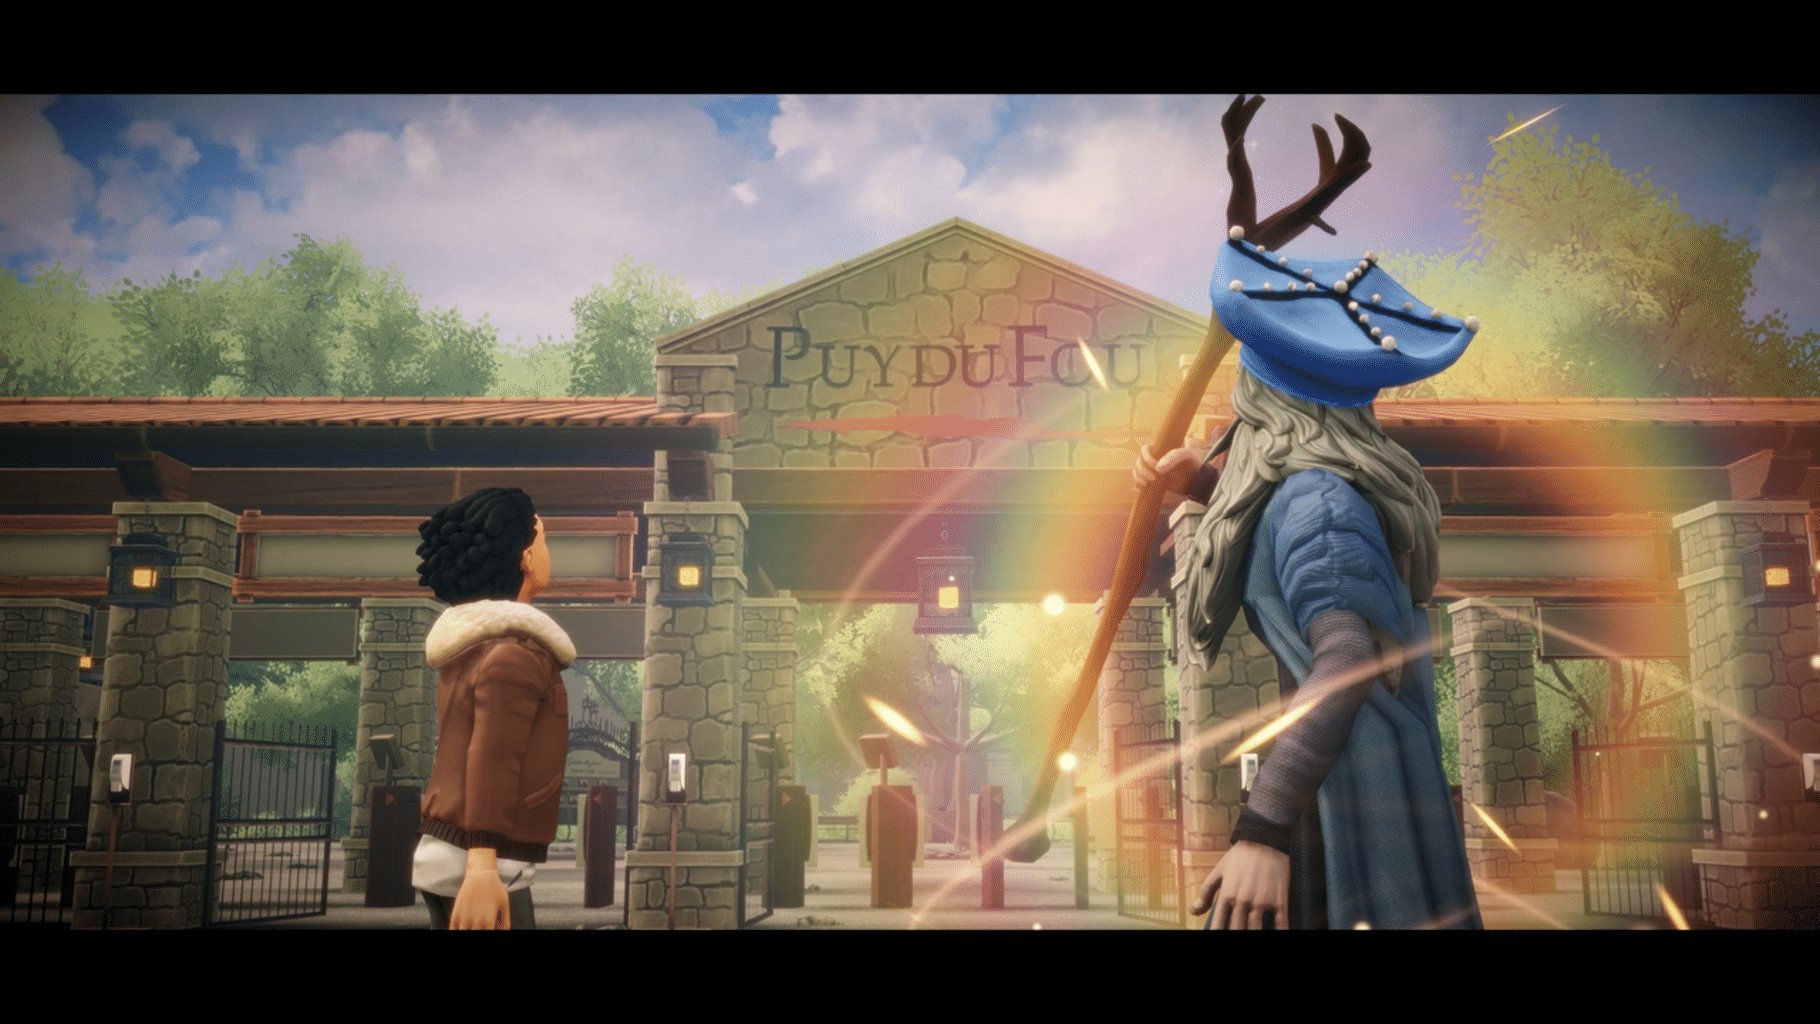 The Quest for Excalibur: Puy du Fou screenshot